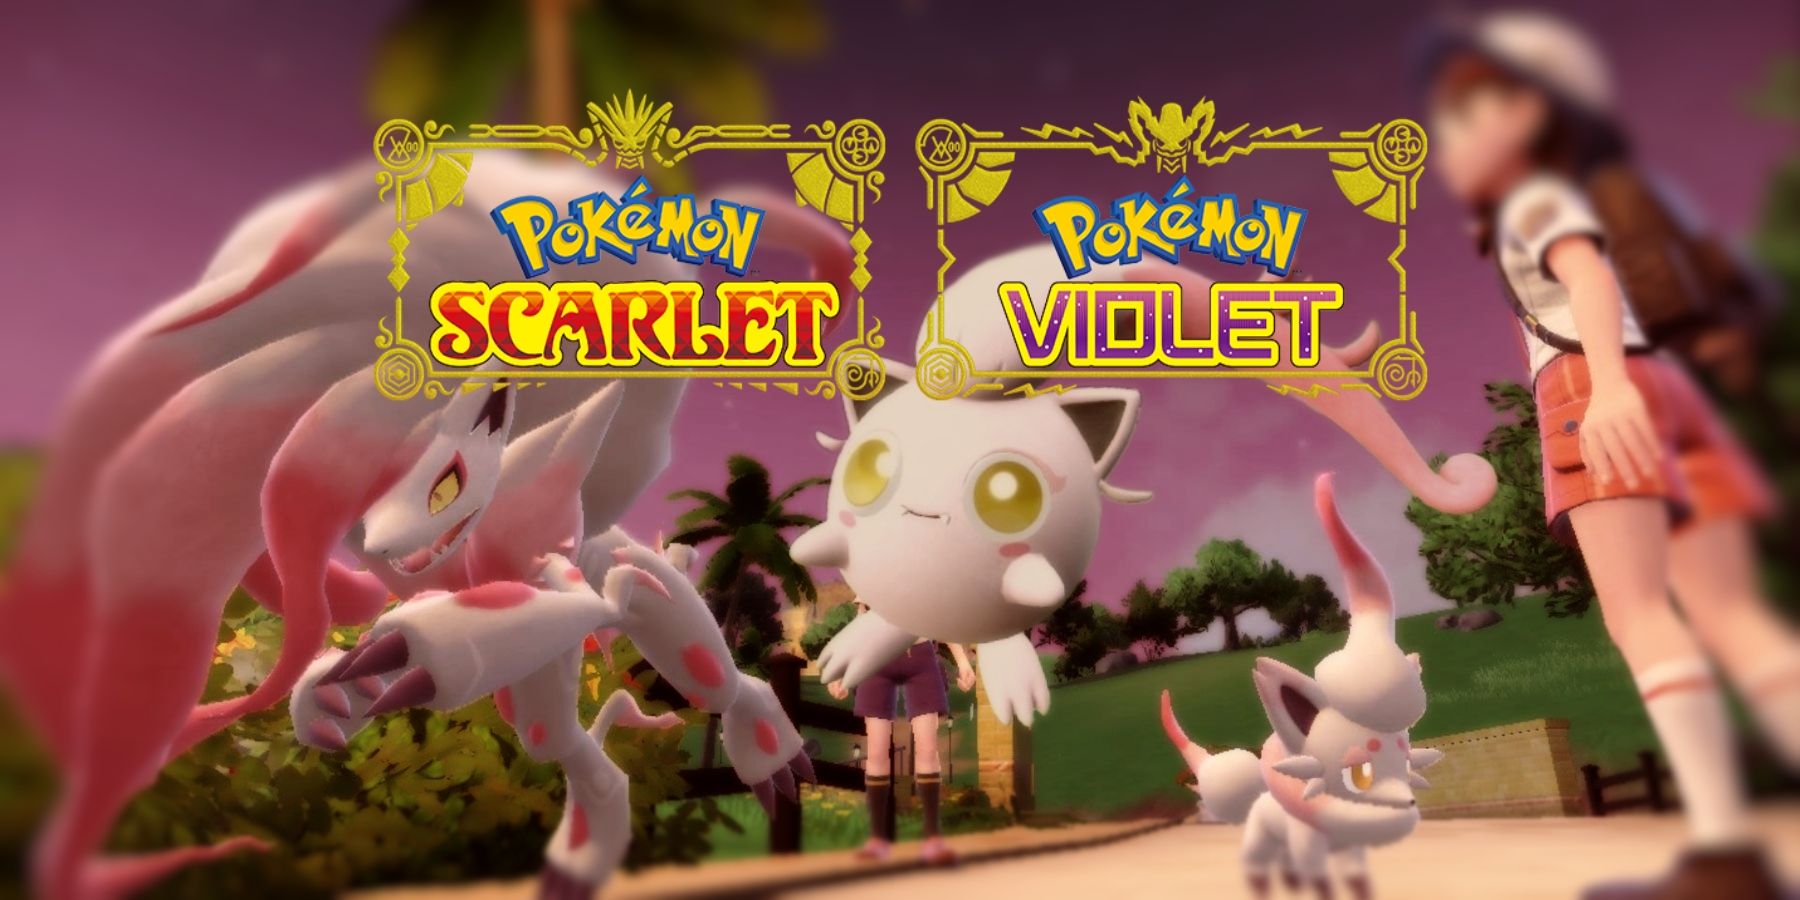 Pokémon Scarlet/Violet – Review